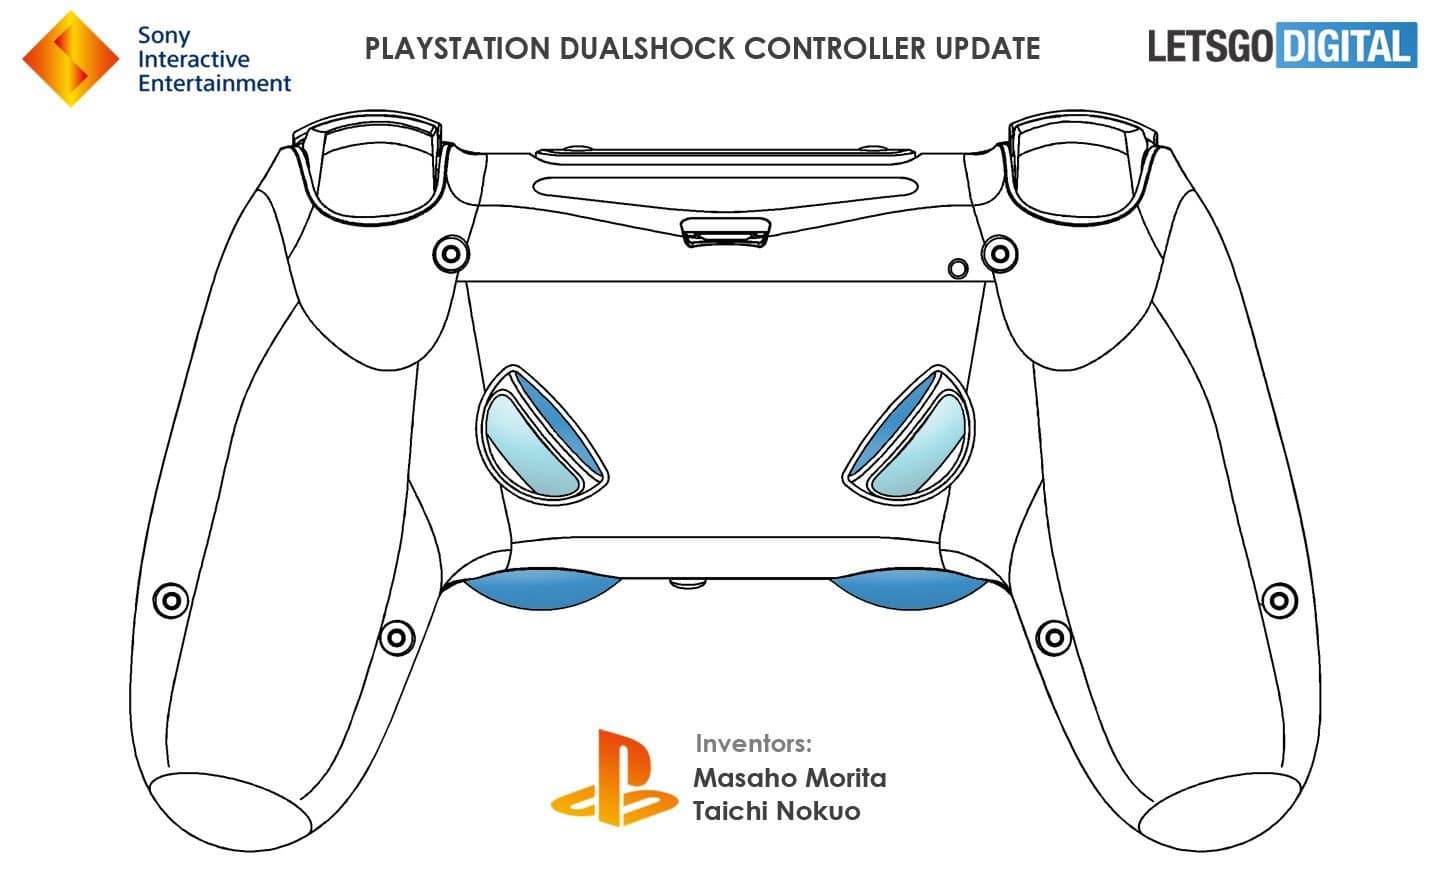 PlayStation 5 dualshock